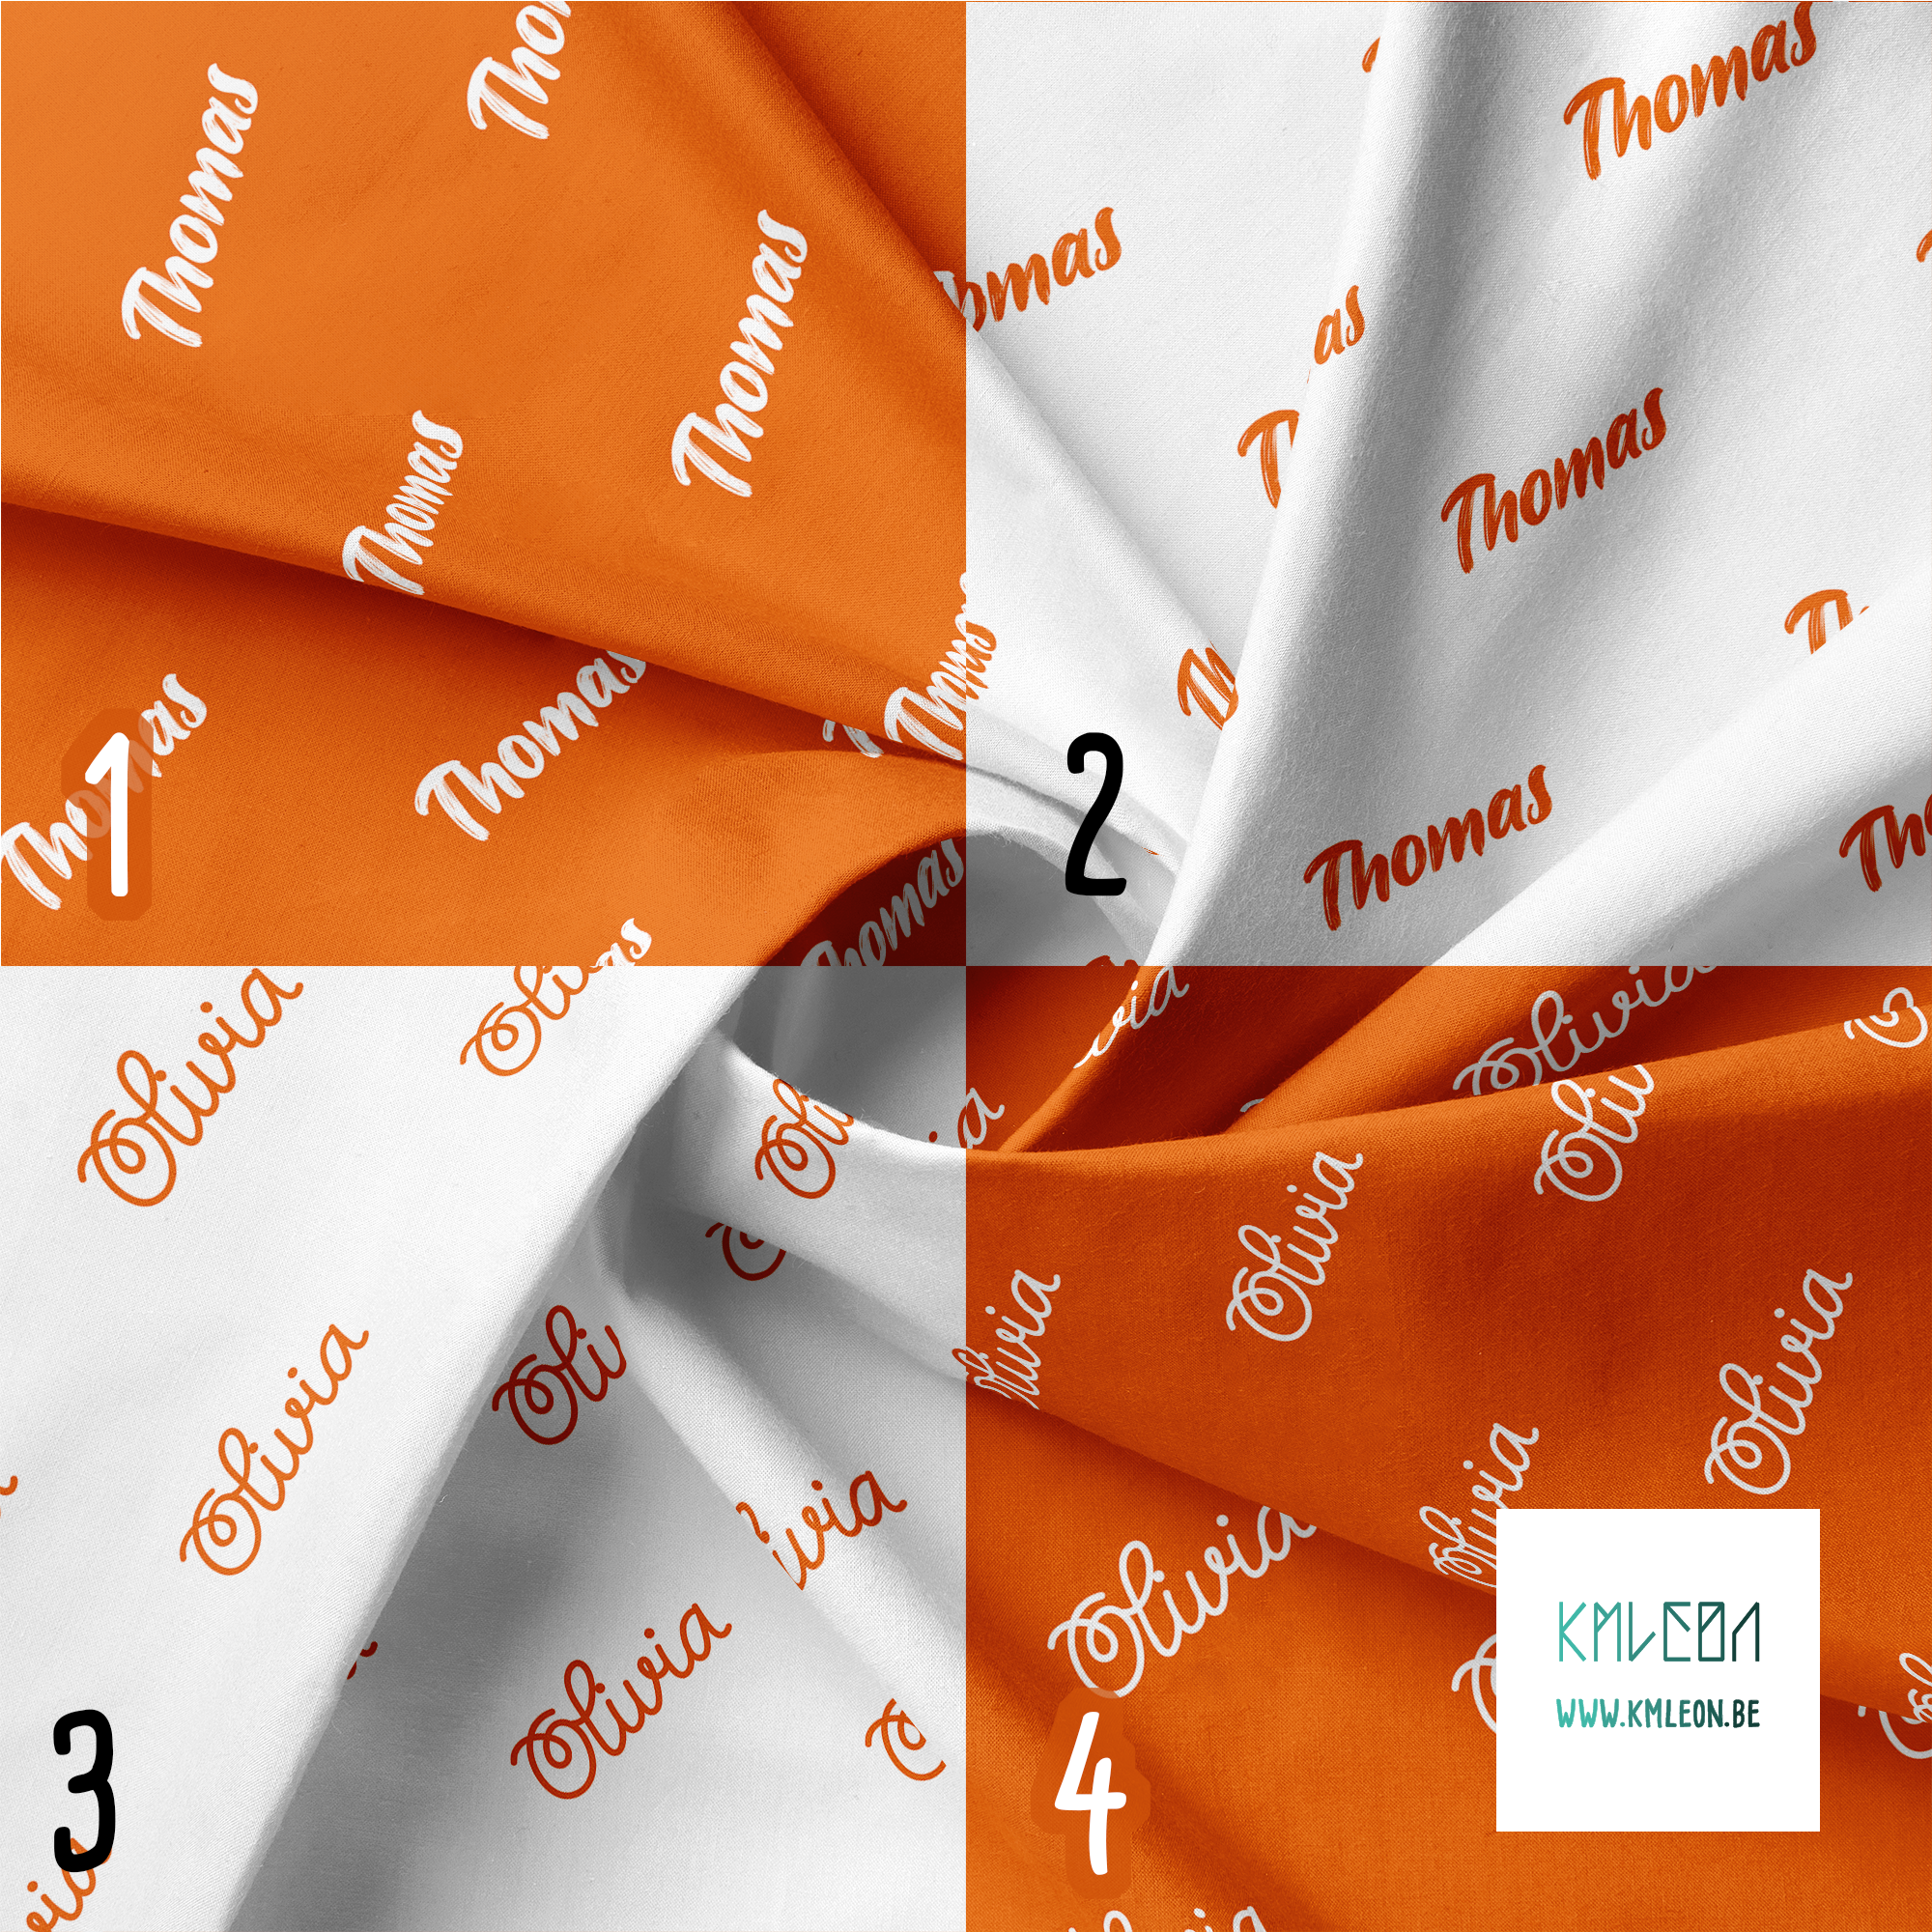 Personalised fabric in vivid orange